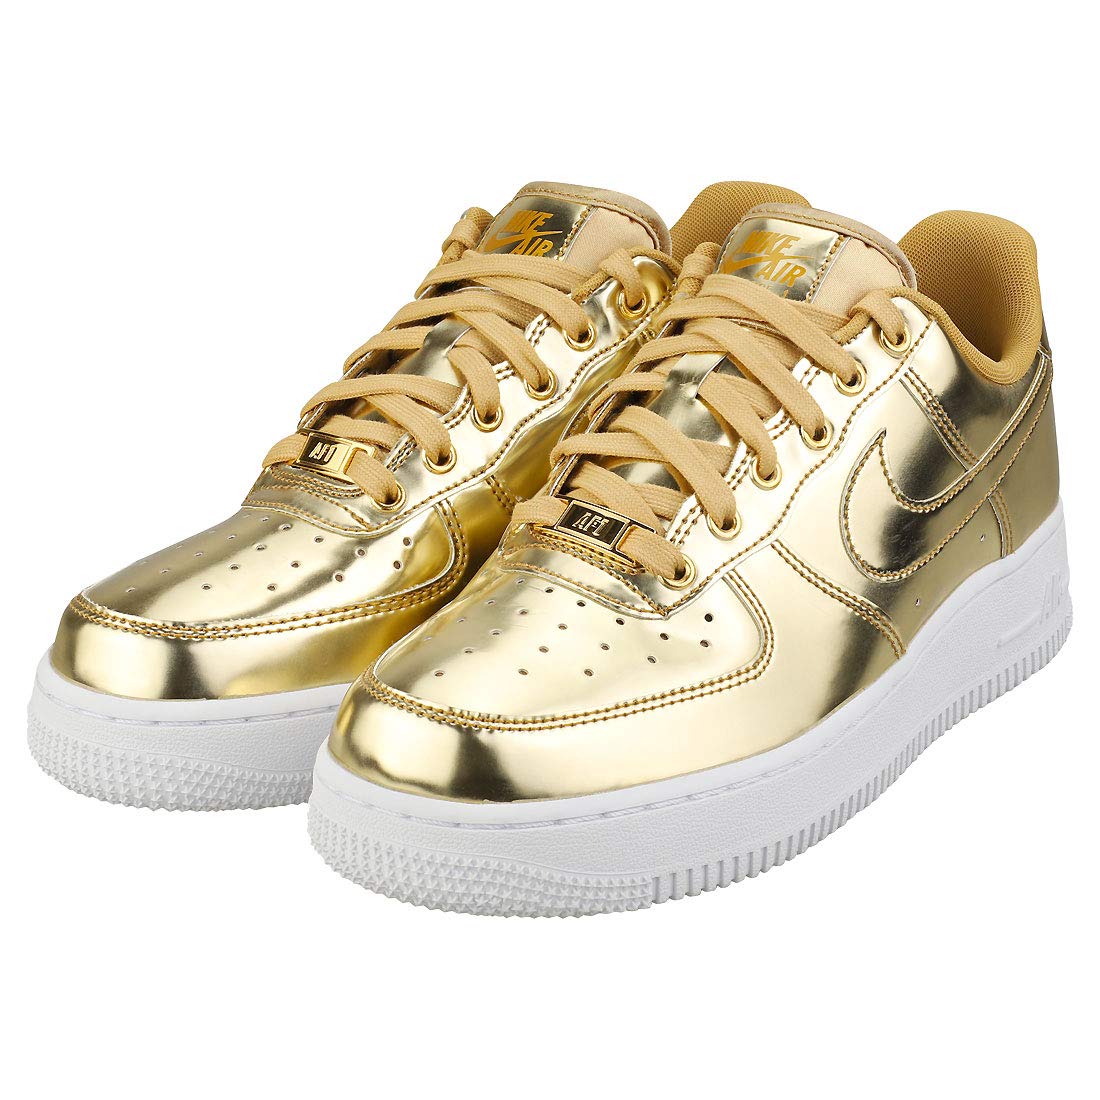 Nike Womens W Air Force 1 SP CQ6566 700 Metallic Gold - Size 7W